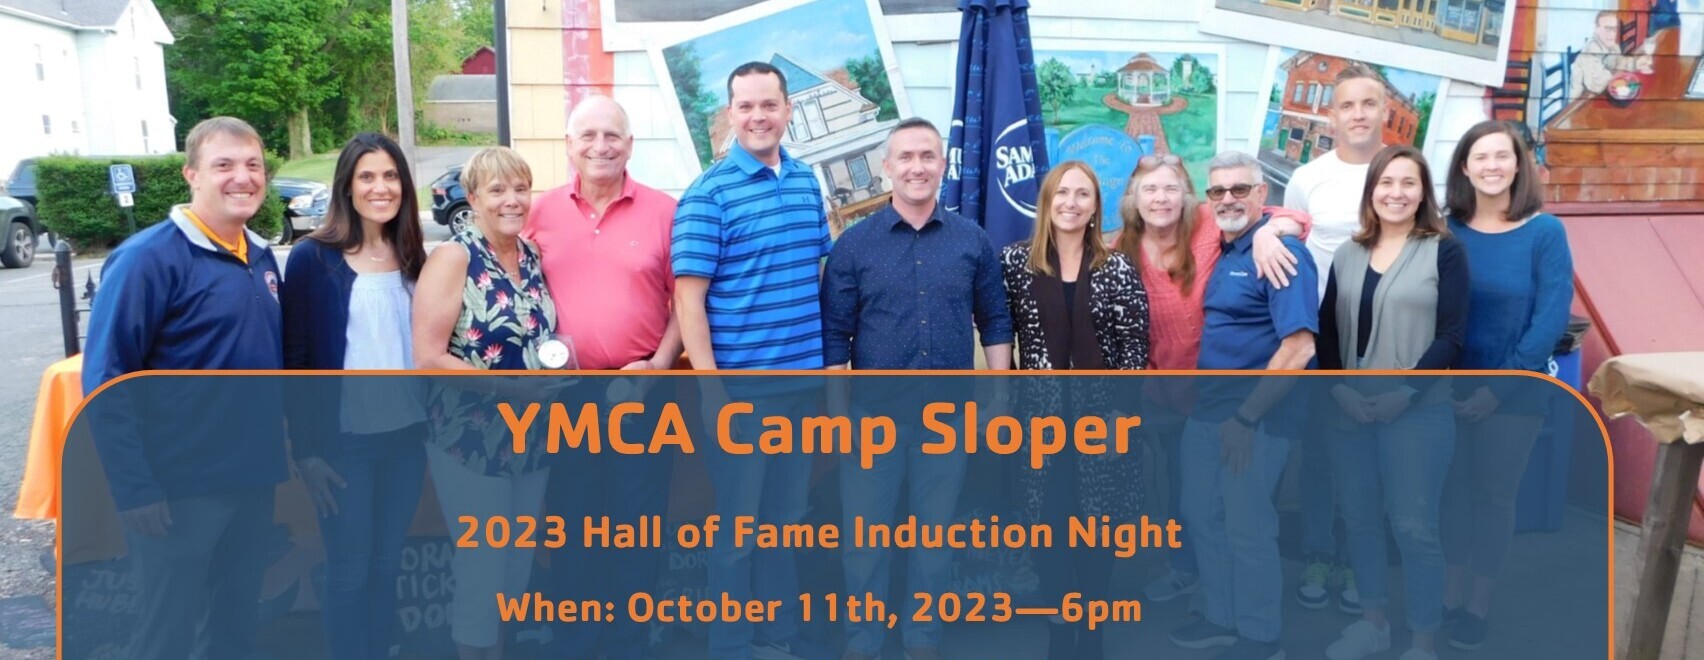 YMCA Camp Sloper Hall of Fame Night 2023